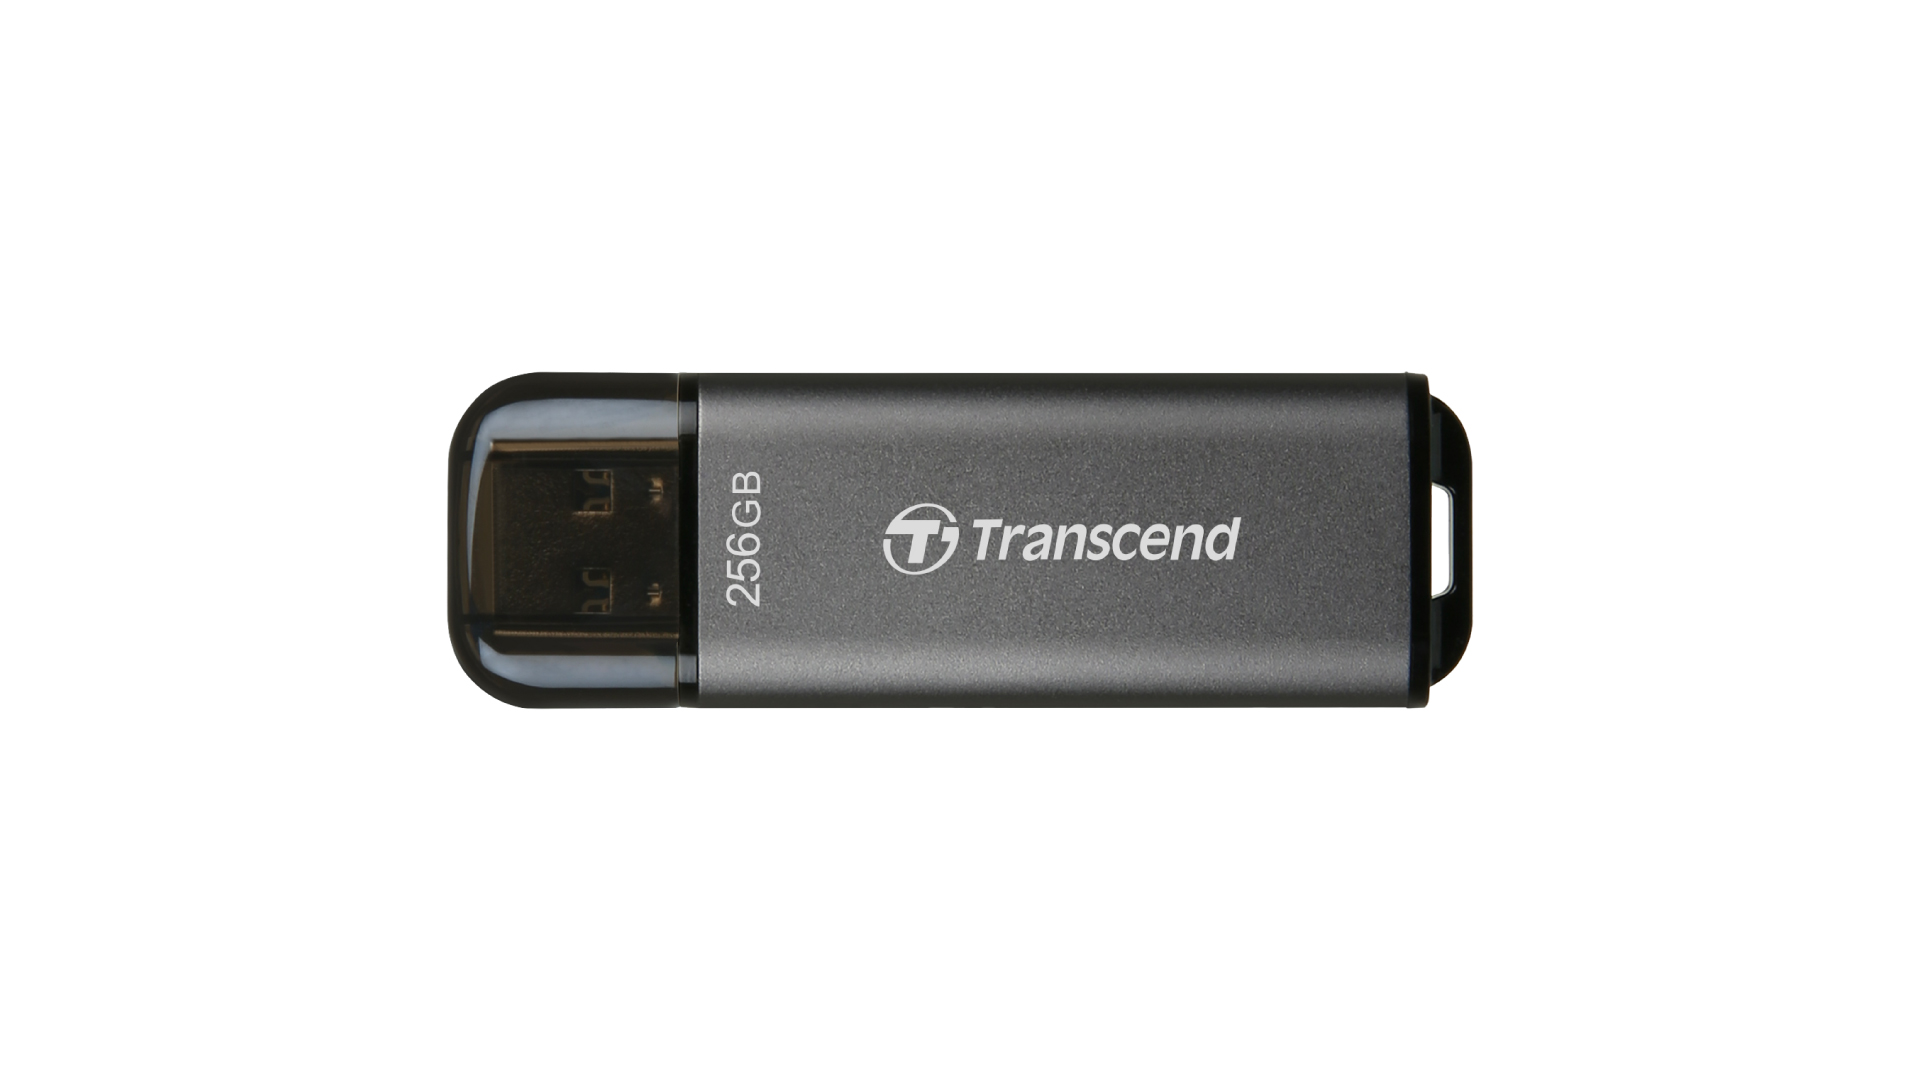 USB Flash Drive / Transcend Information, Inc.